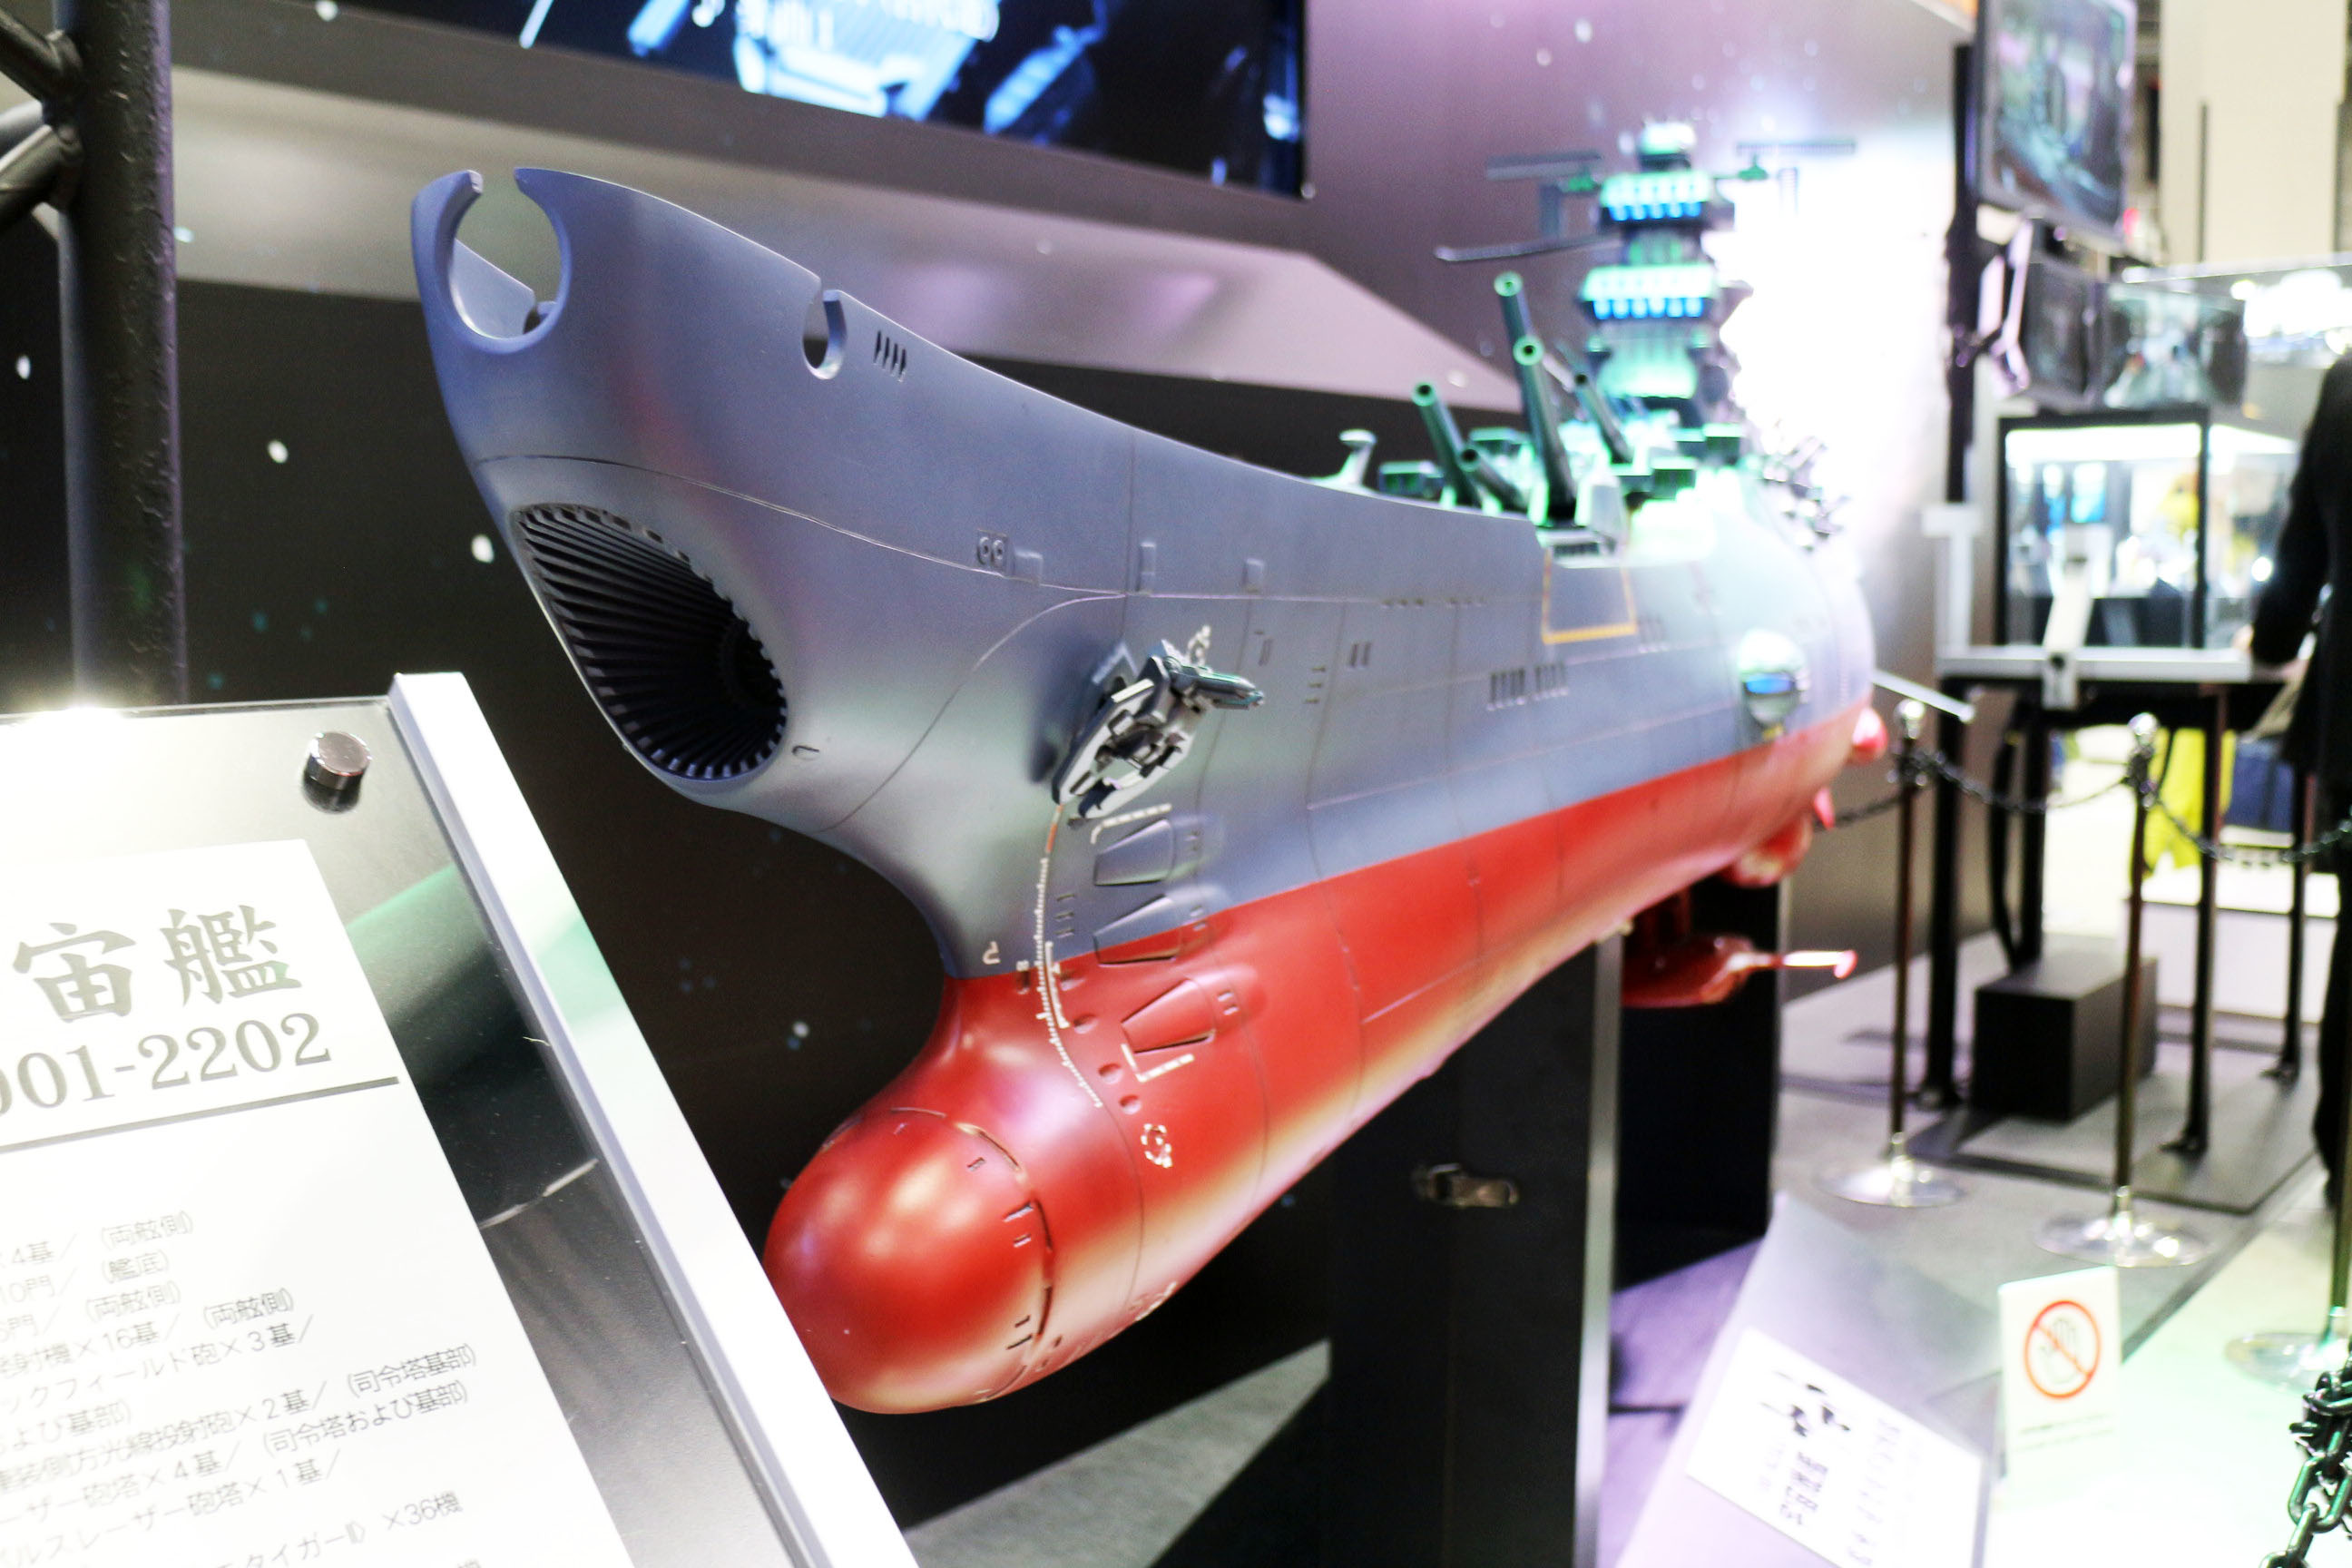 BANDAI SPIRITSの「超合金魂」宇宙戦艦ヤマト。4メートルを超える大きさで2019年3月発売予定